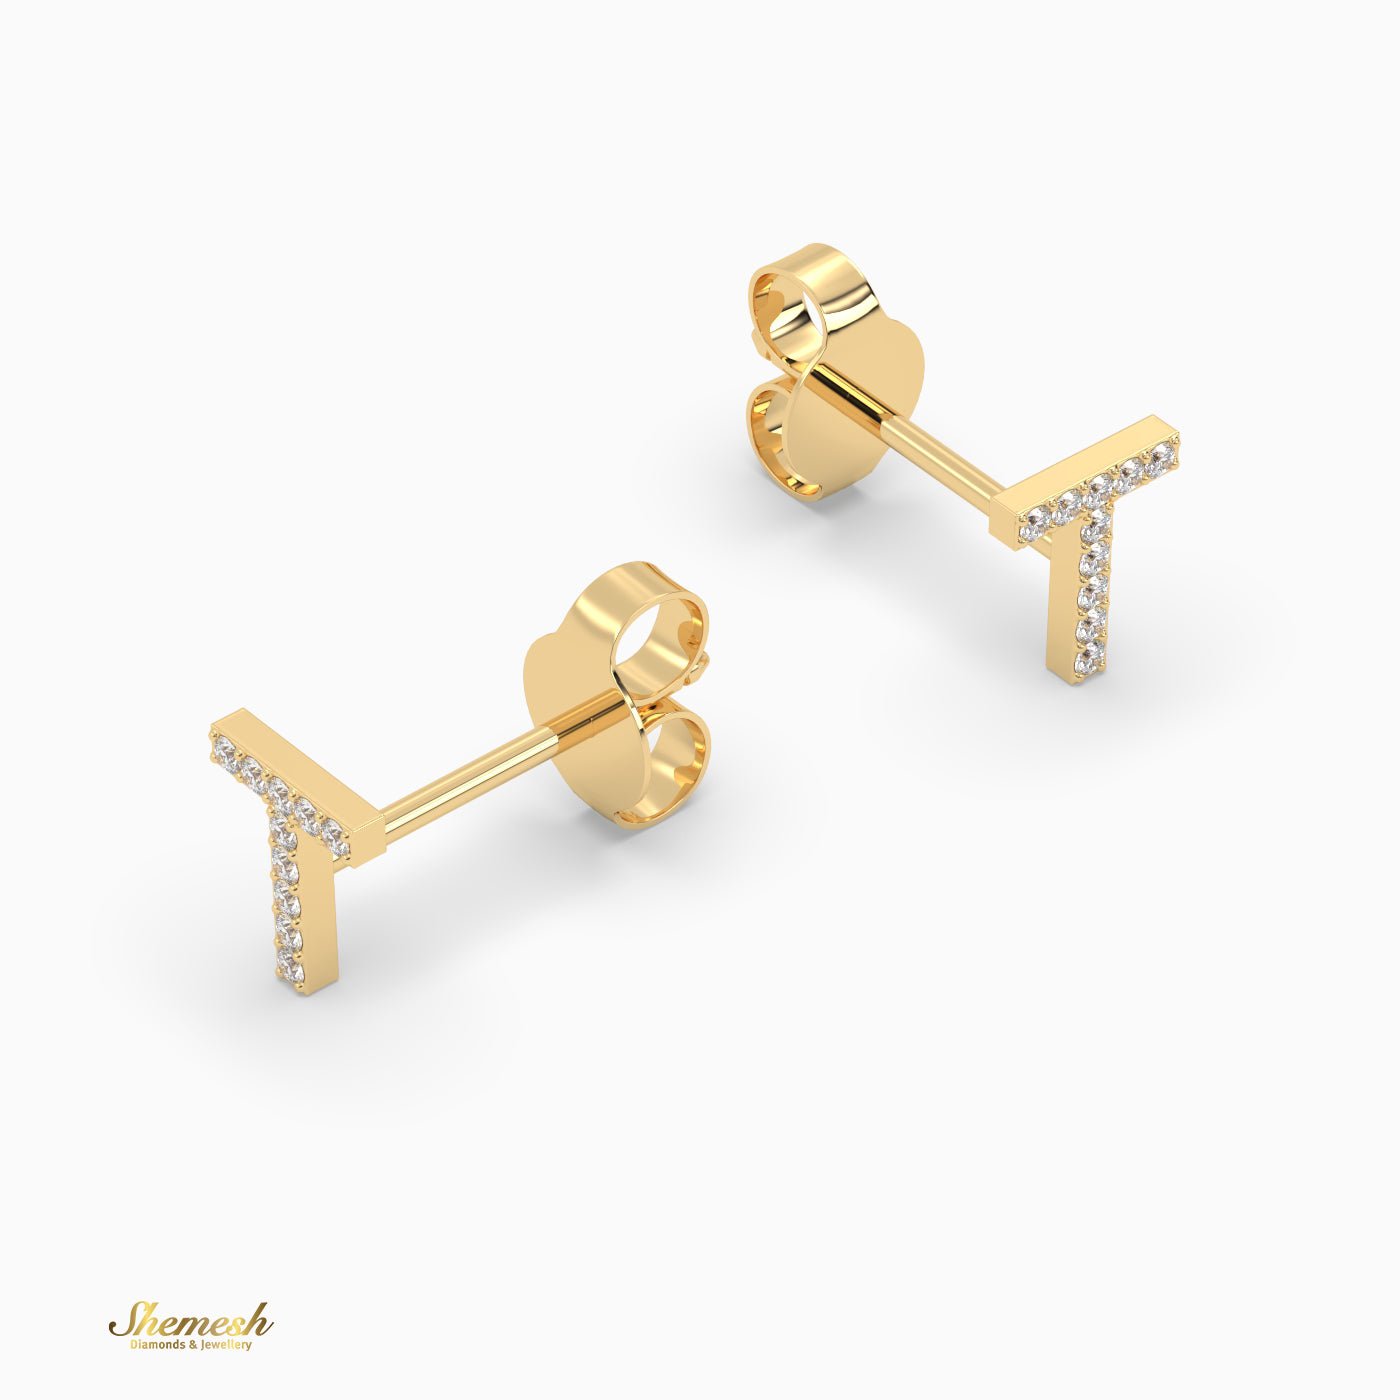 18K Gold "T" Initial Stud Earrings - shemesh_diamonds